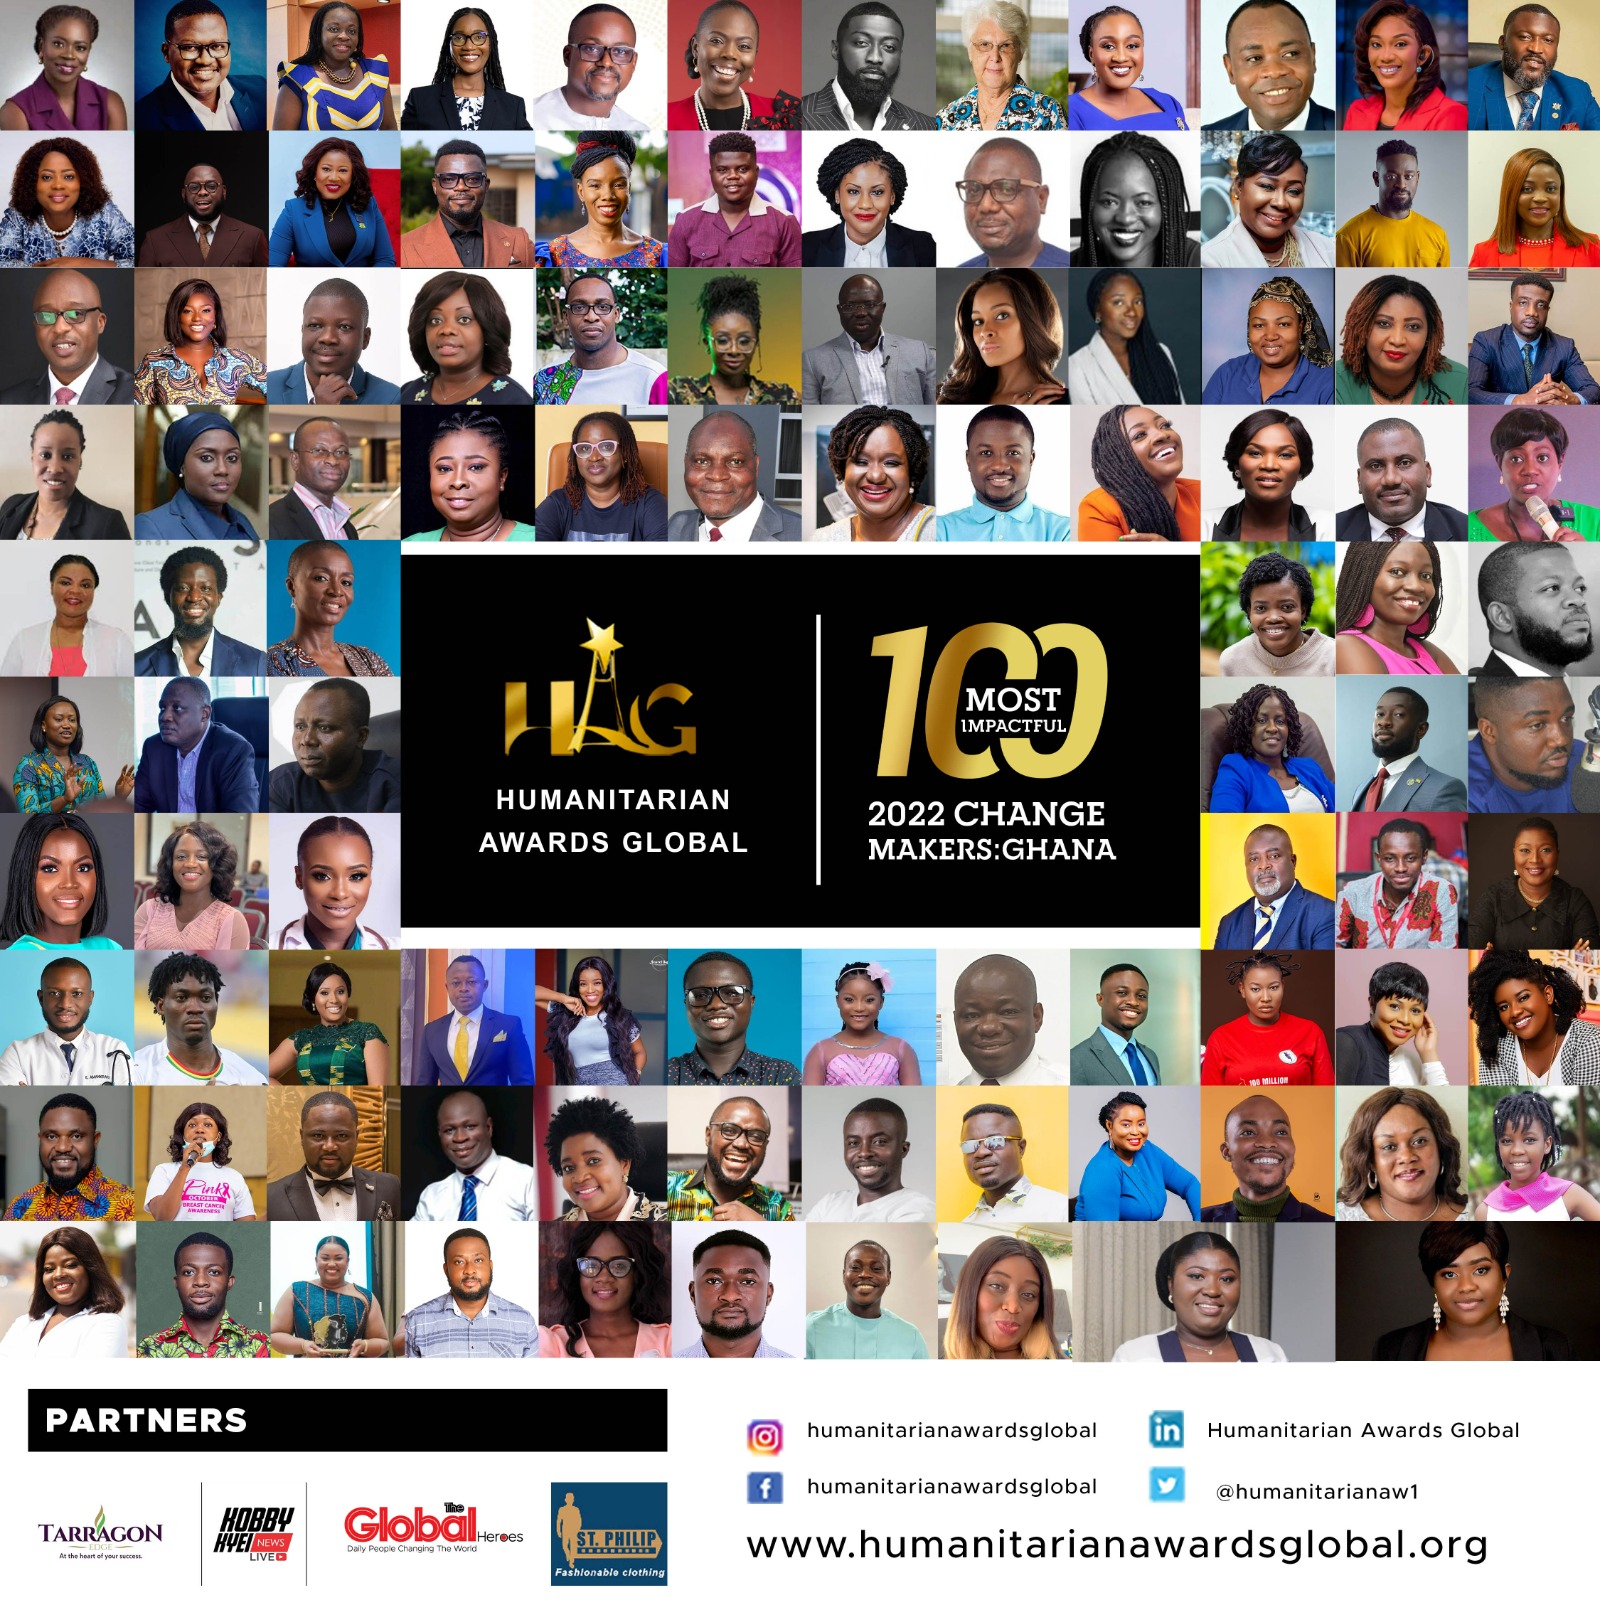 Humanitarian Awards Ghana announces 100 Most Impactful 2022 Change Makers